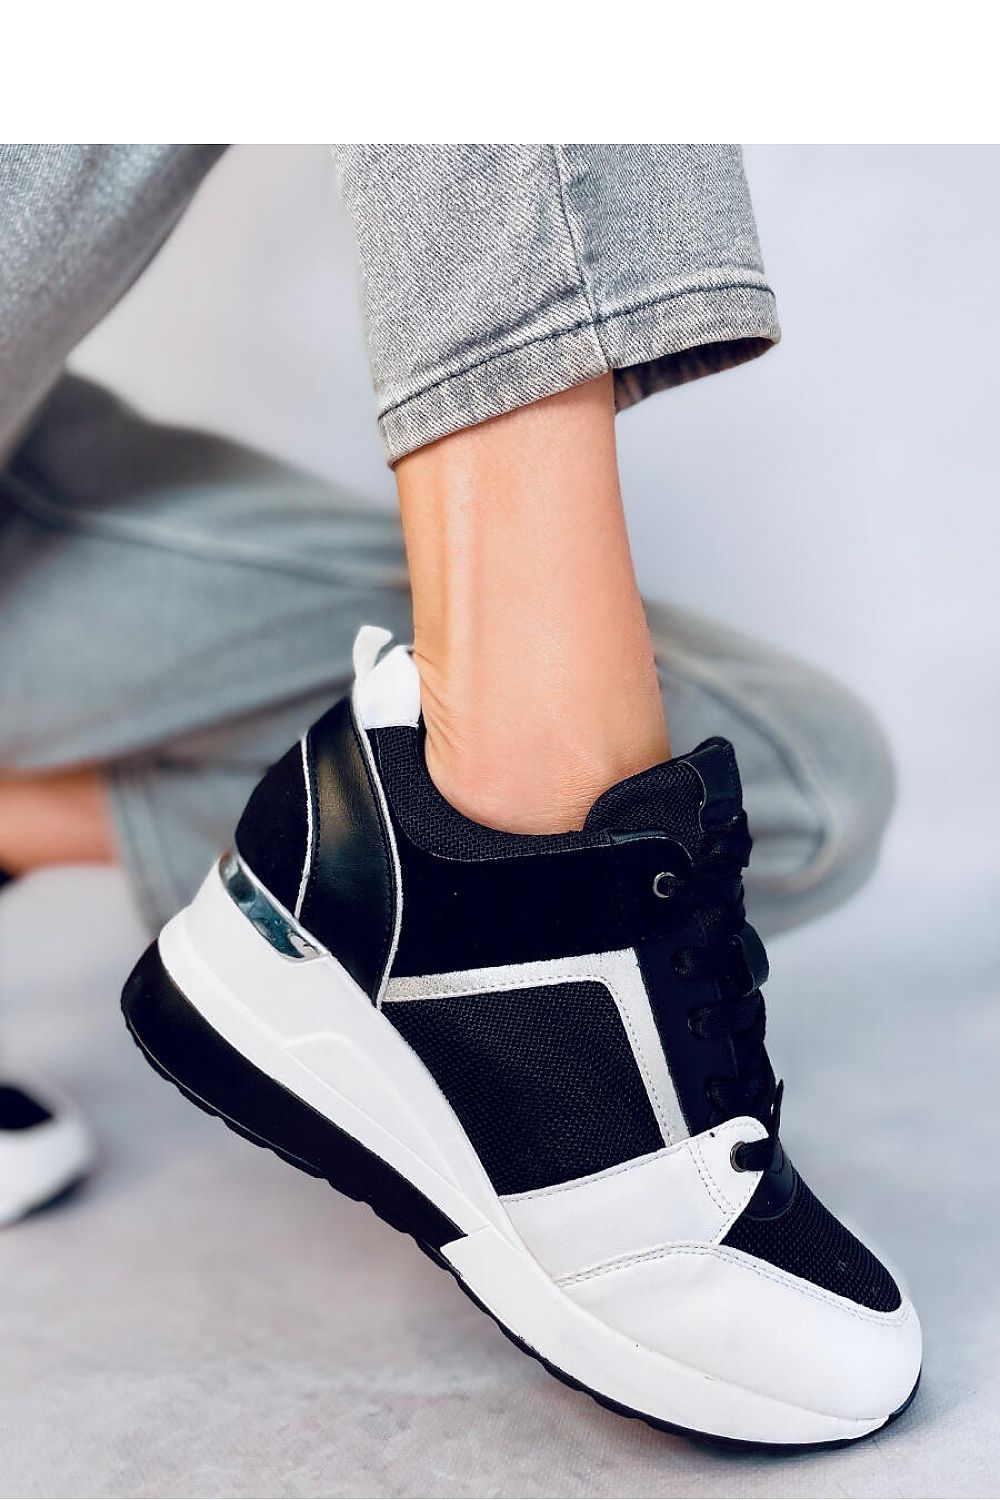 TEEK - Black White Wedge Sneakers SHOES TEEK MH   